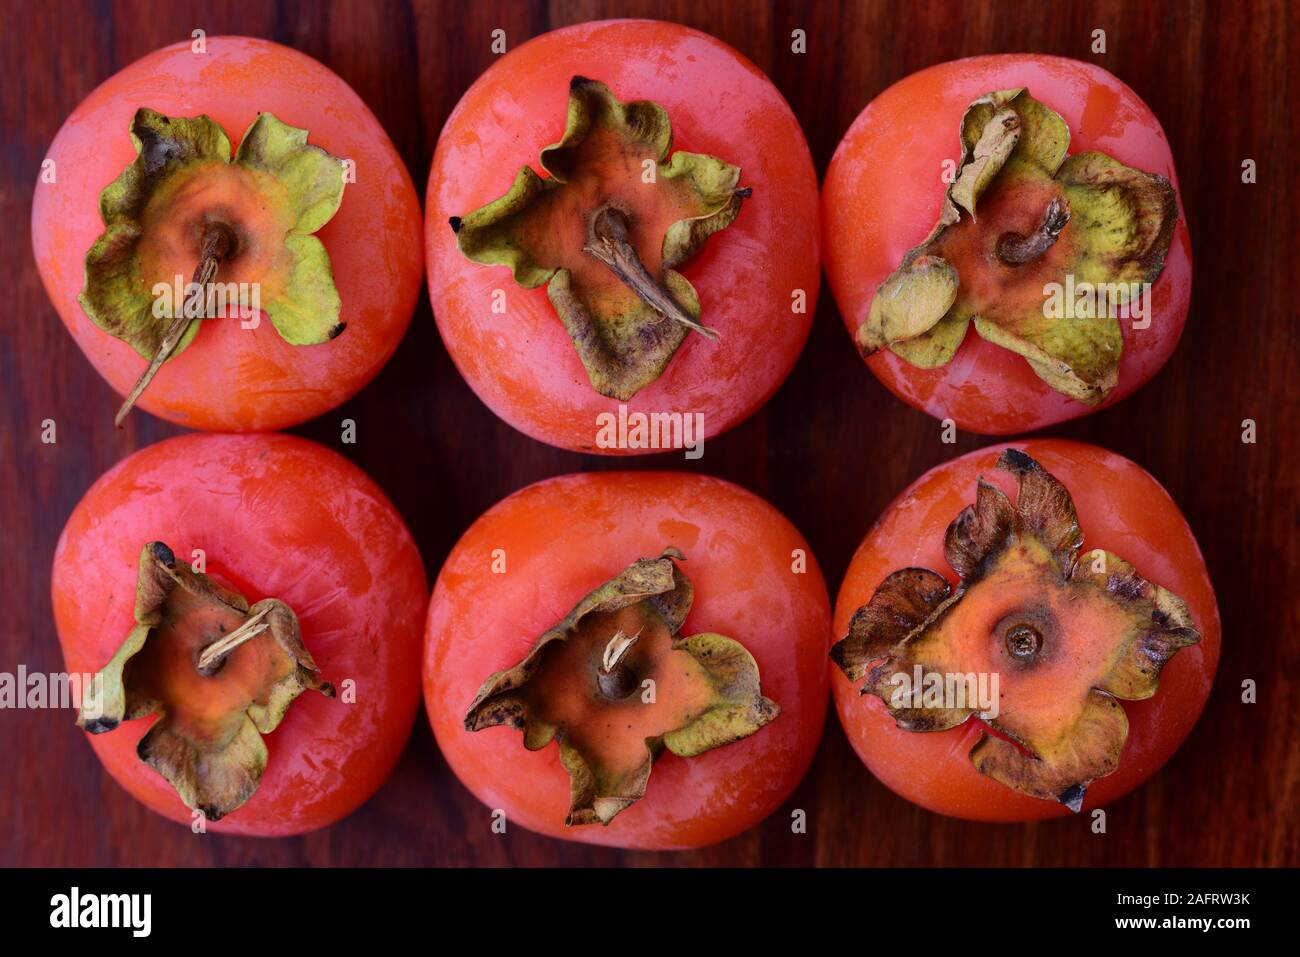 6 overripe orange persimmon fruits lie next to each other on dark wood Stock Photo